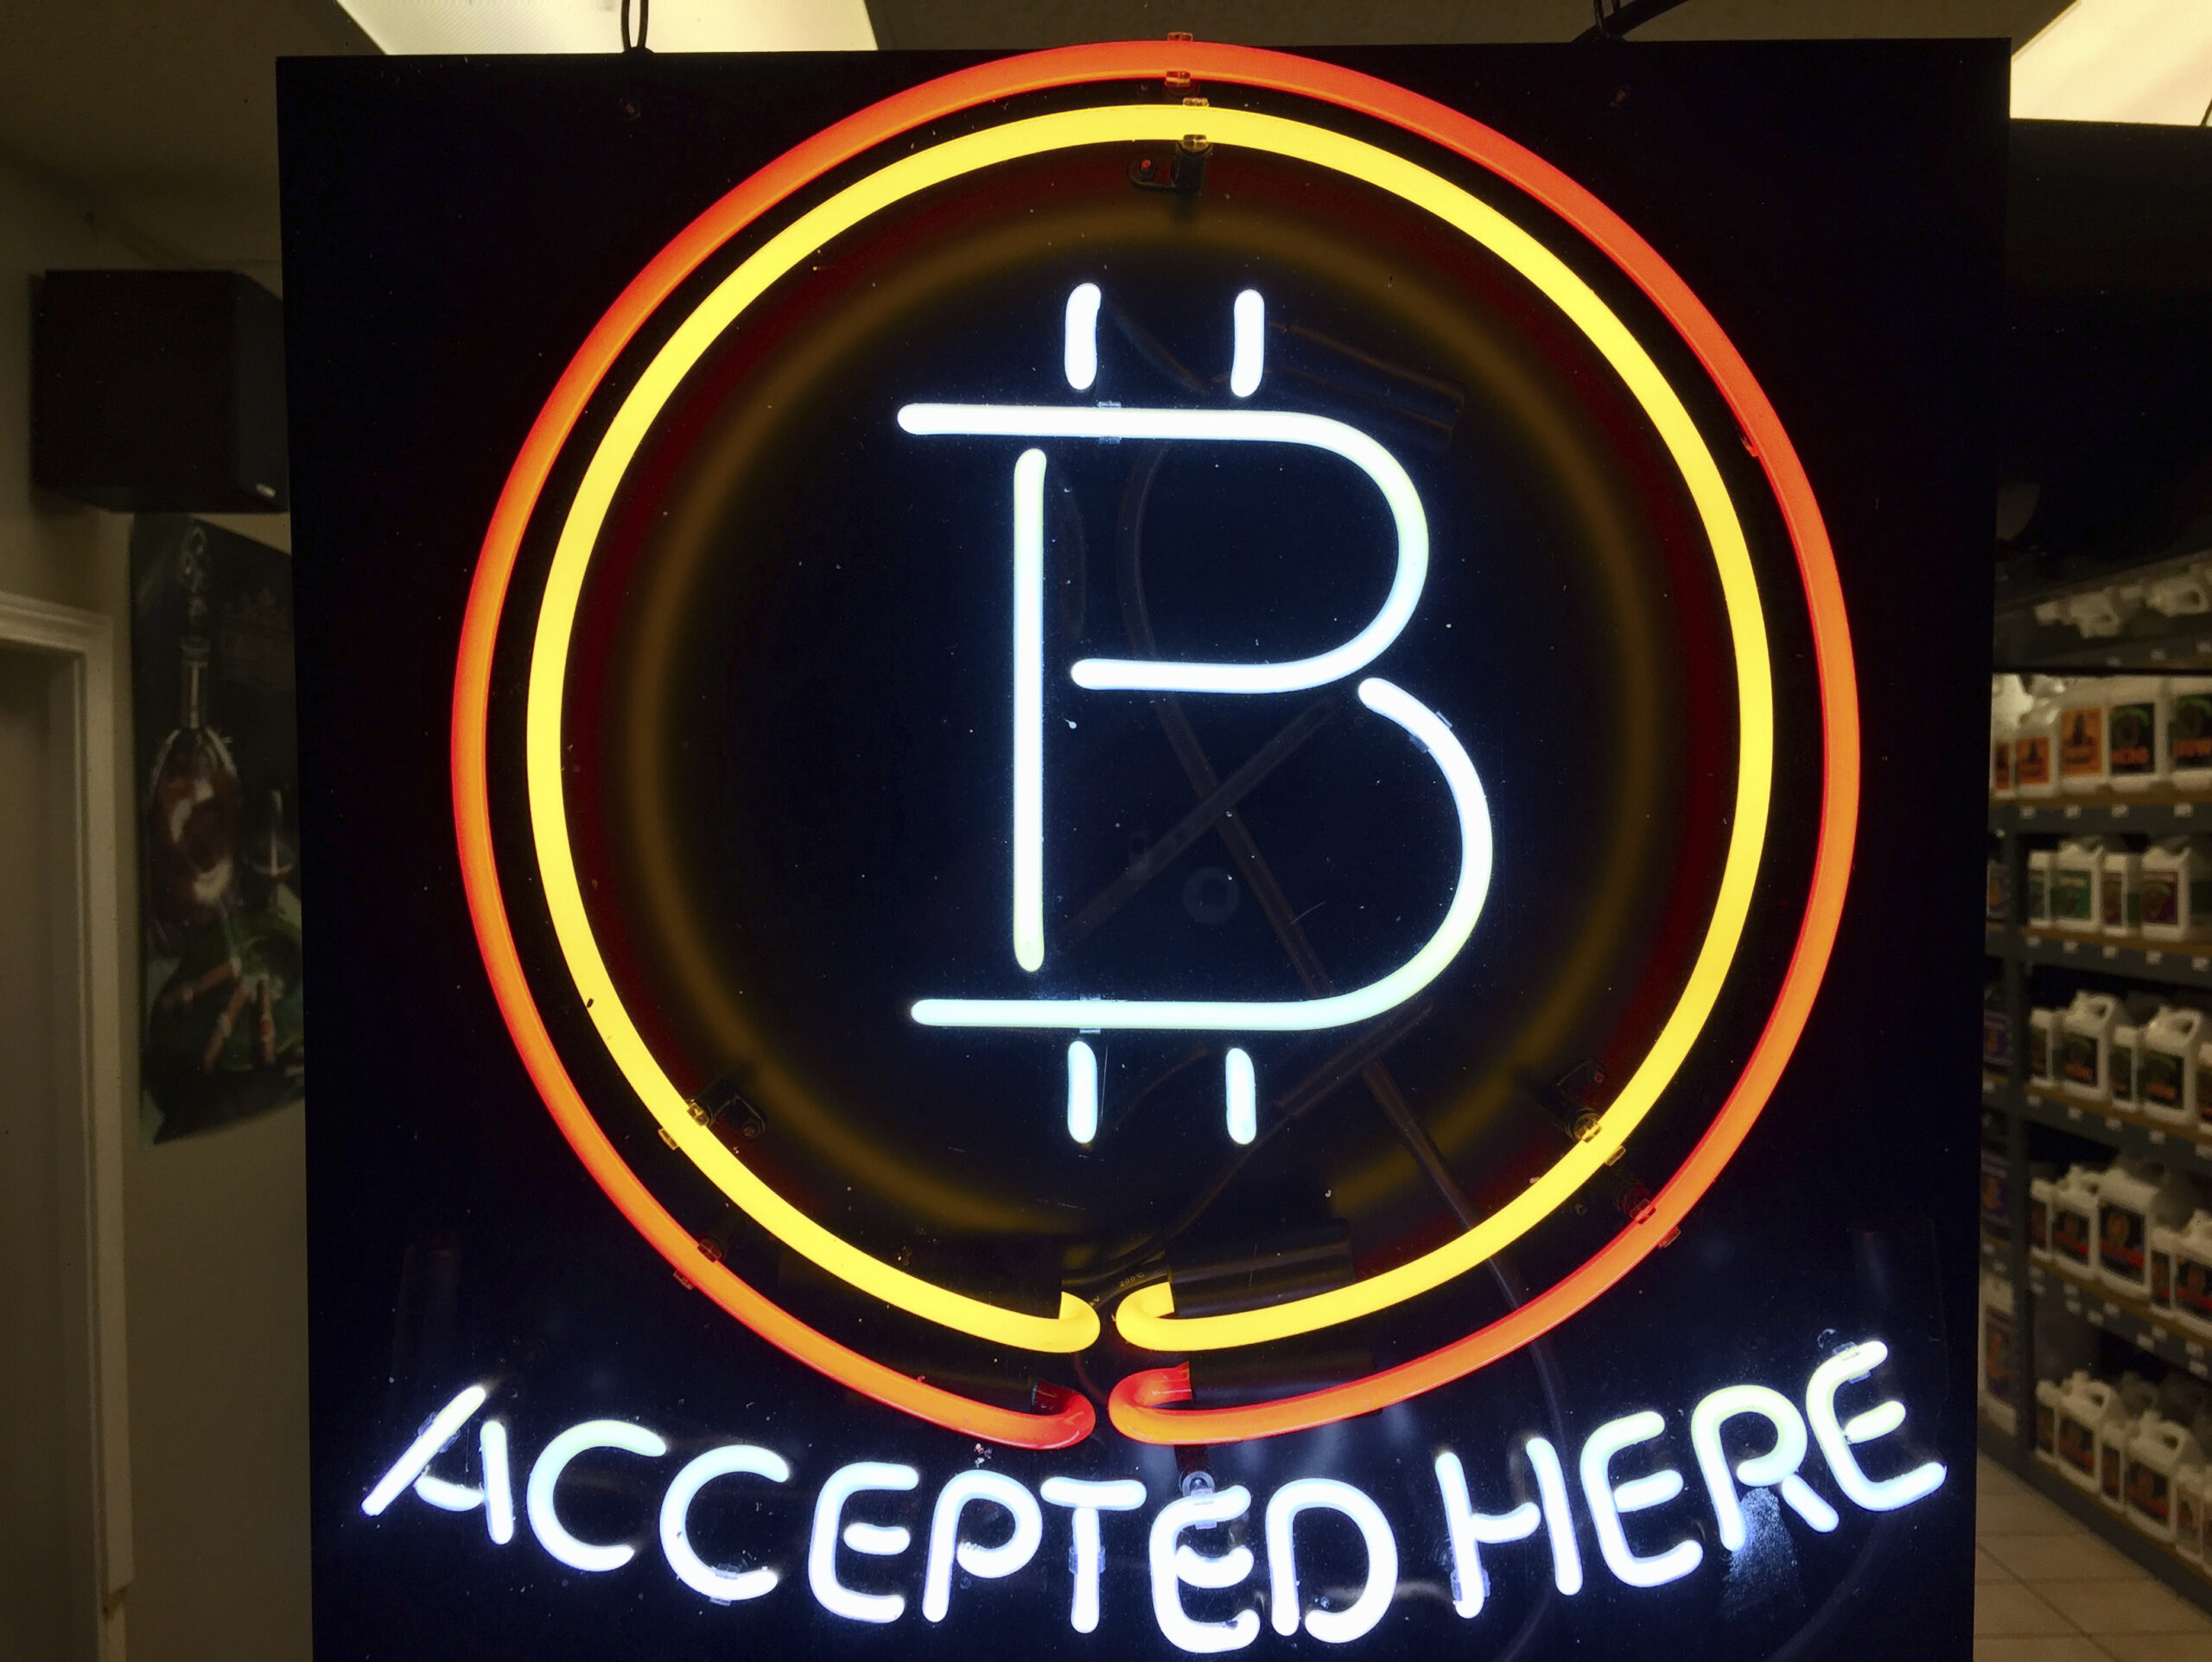 Bitcoin neon sign